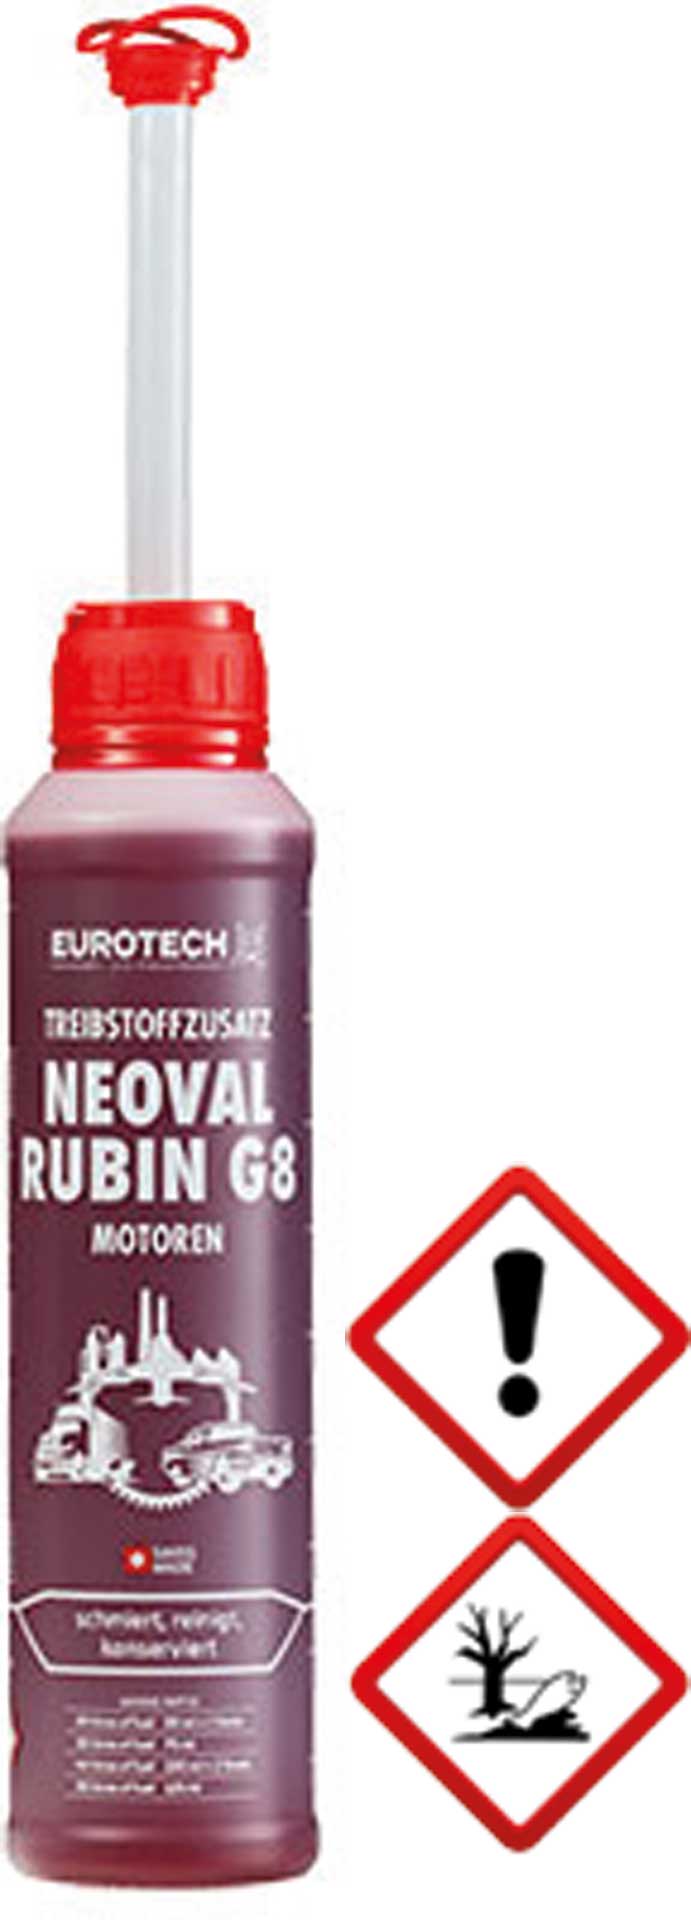 EUROTECH NEOVAL RUBIN G8 MOTOR 500ML FLASCHE